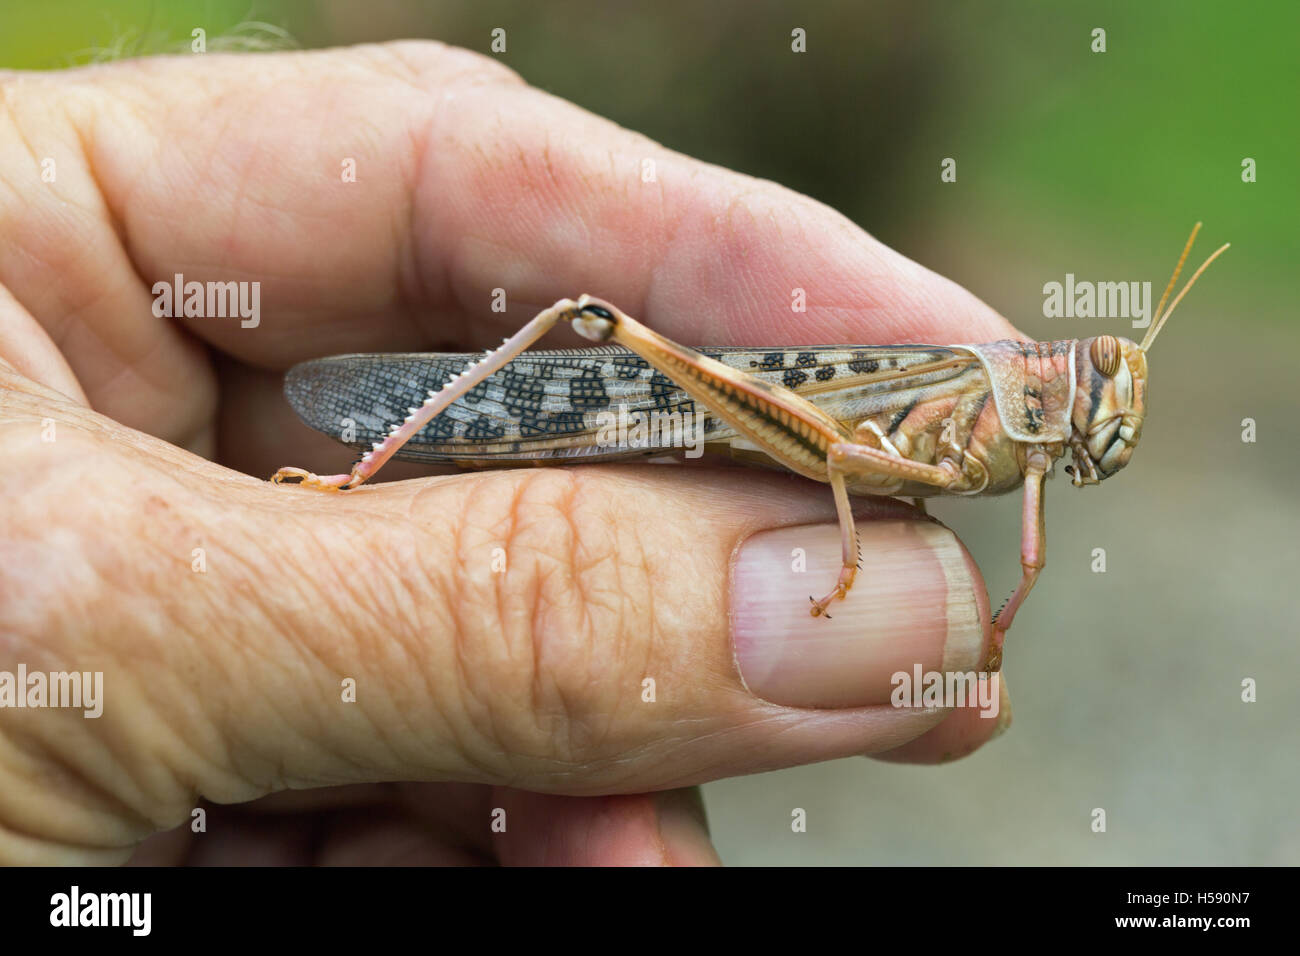 Desert Locust (Schistocerca gregaria). Held between a man’s finger and thumb, the photographer’s. Stock Photo